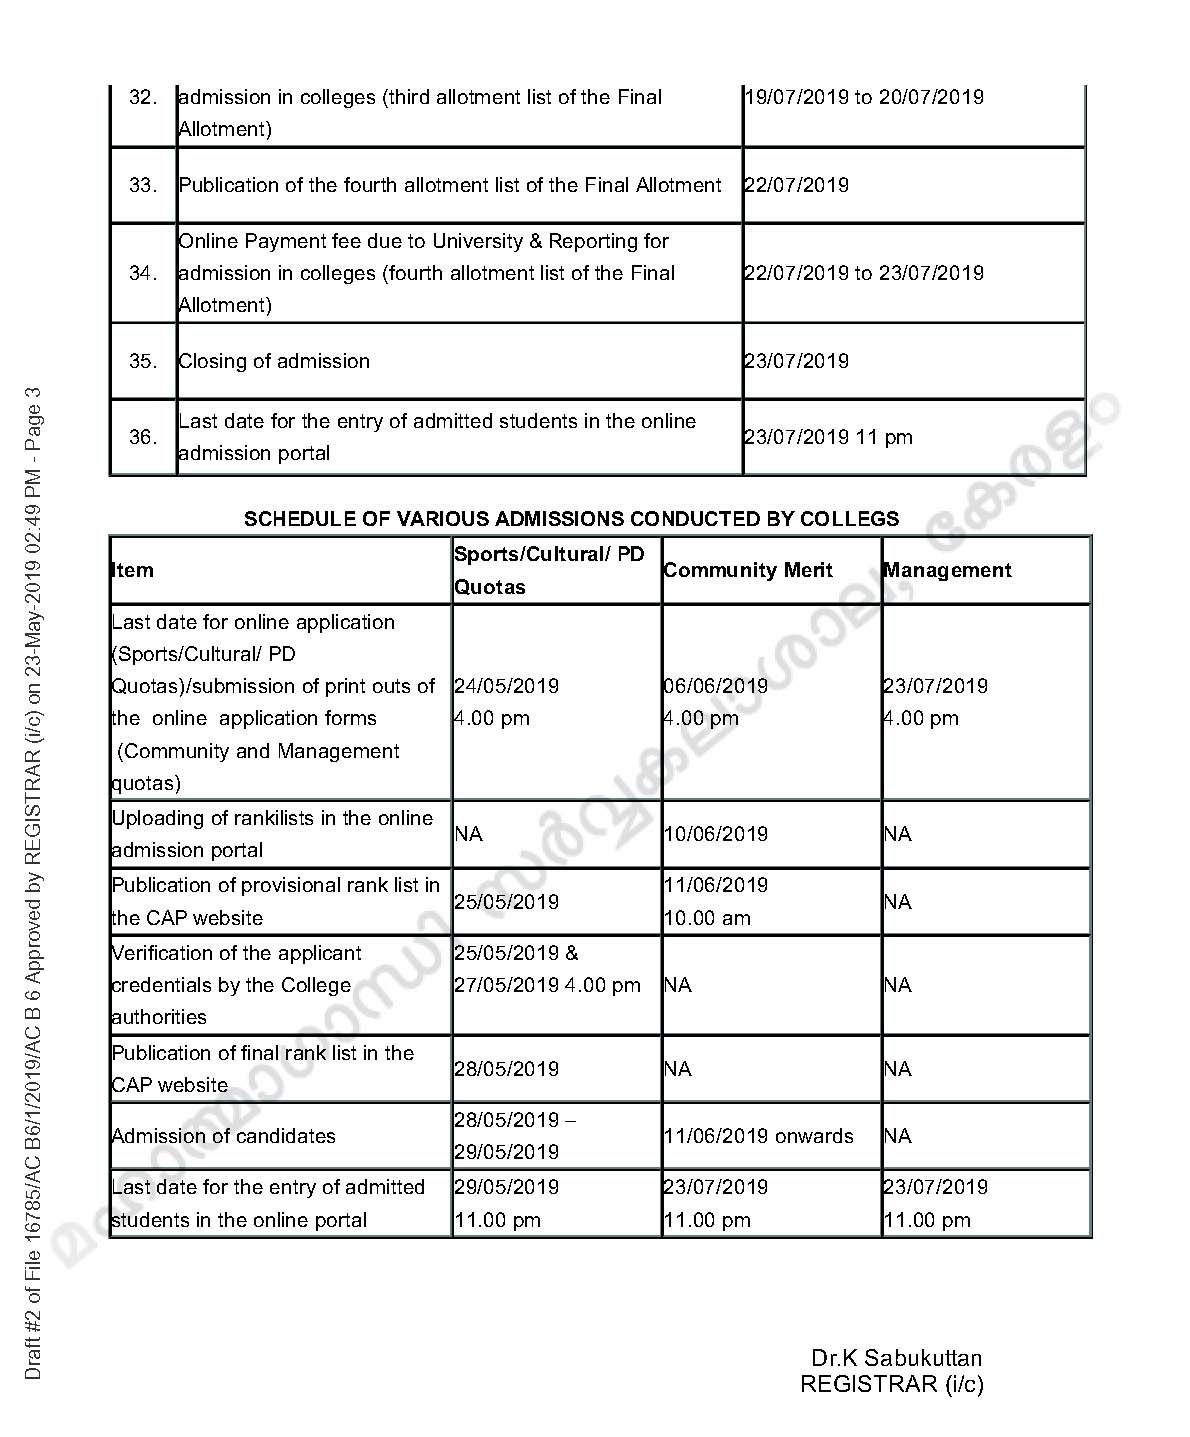 MG University Kerala Admission Schedule 2019 2020 - Notification Image 3